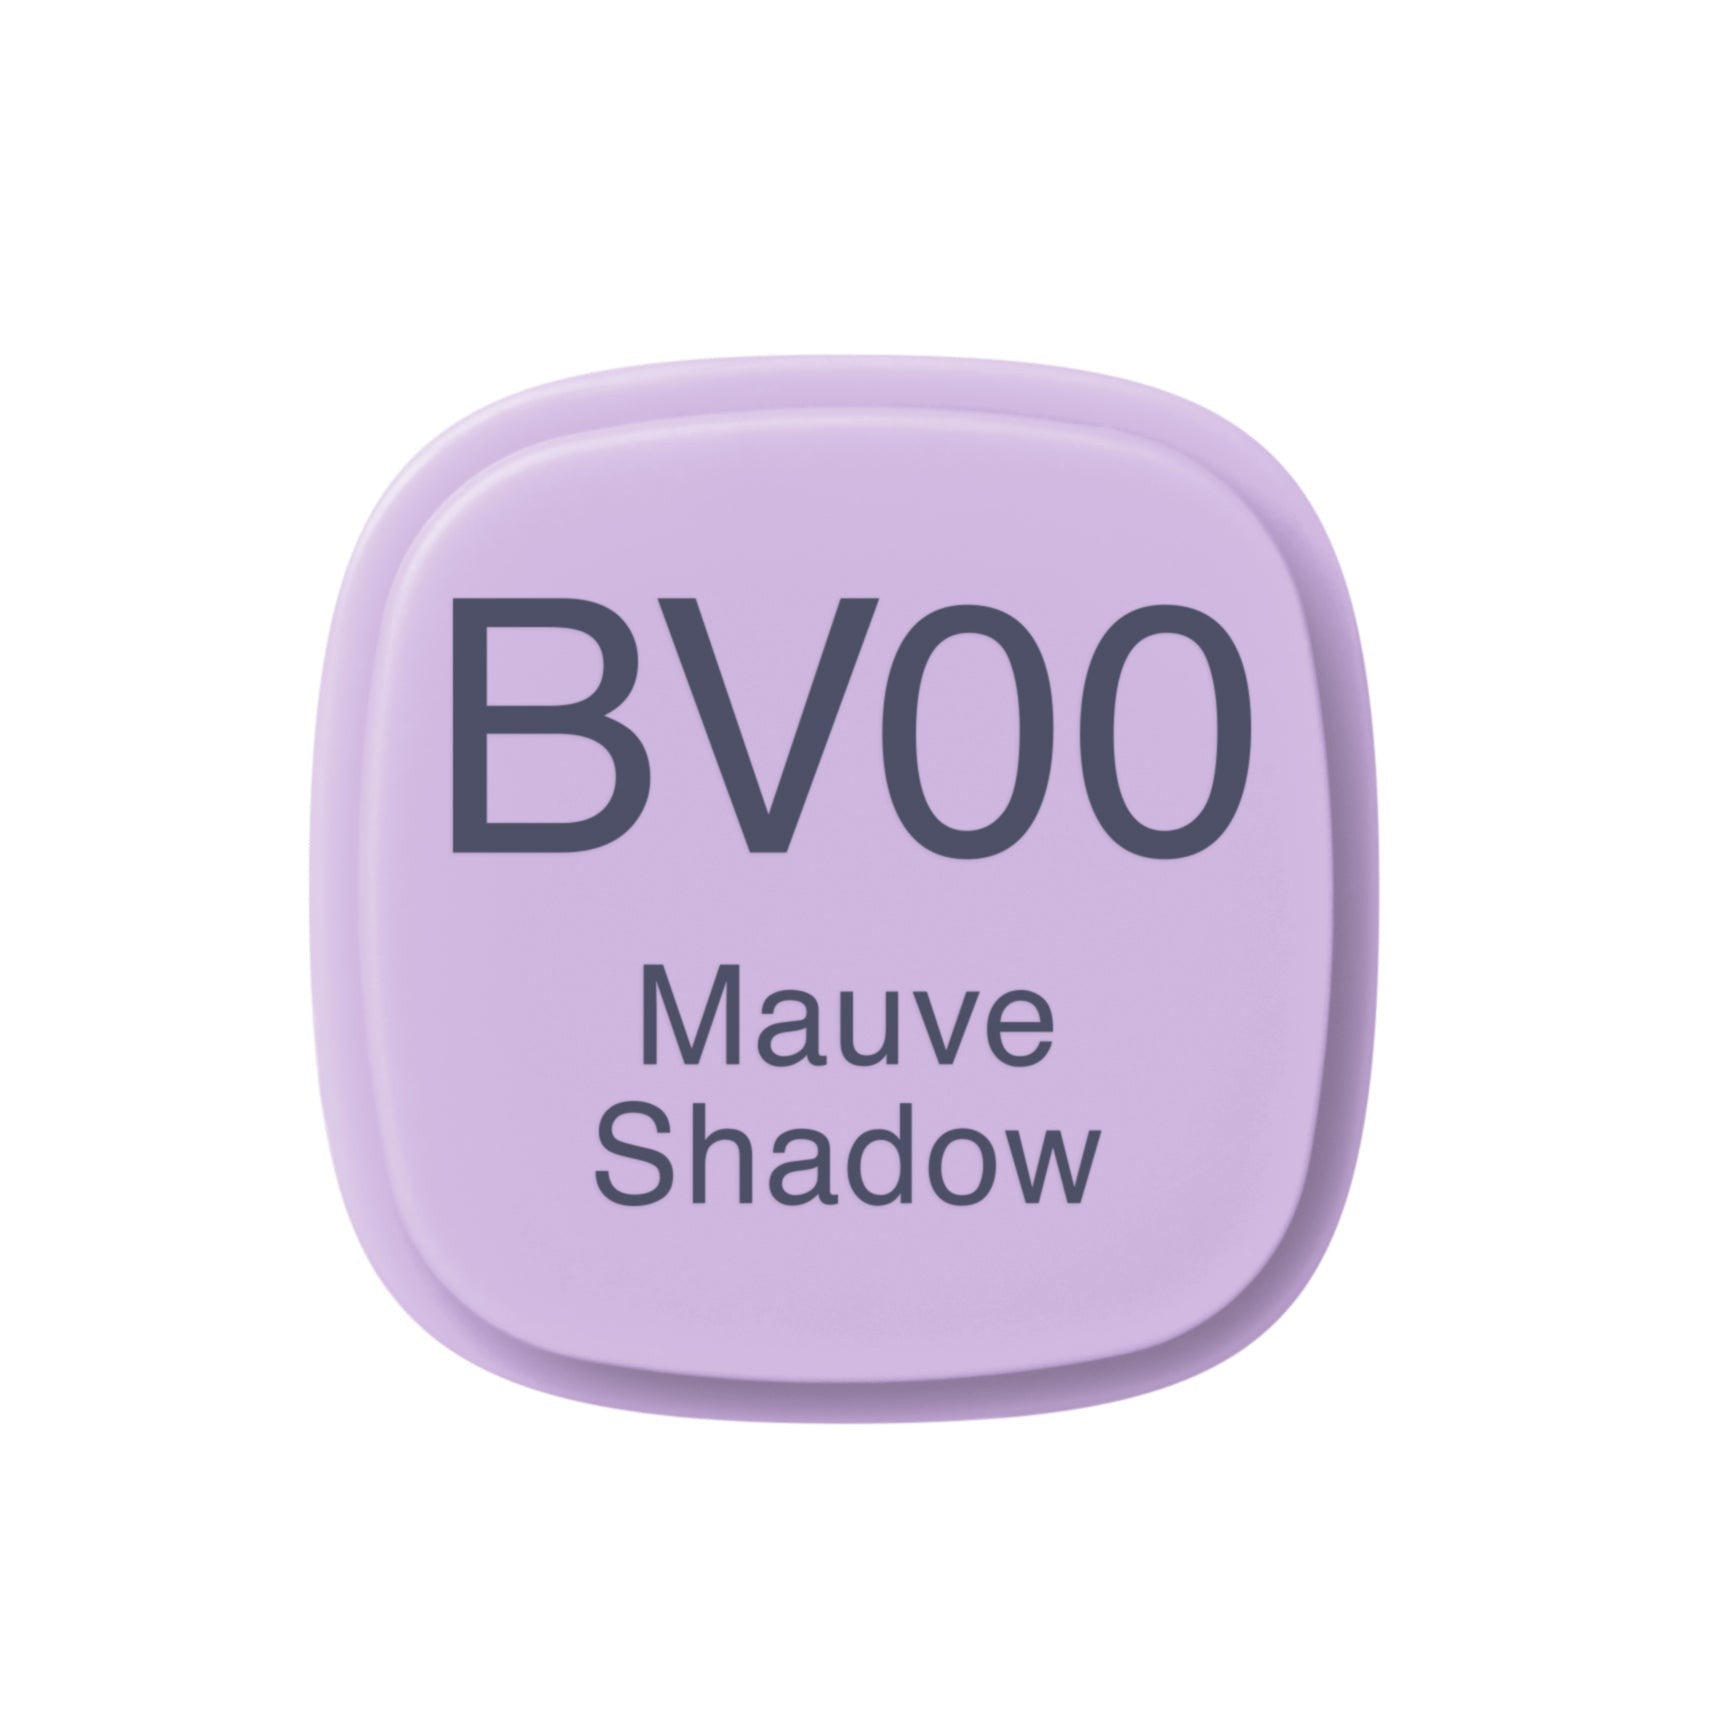 Copic - Original Marker - Mauve Shadow - BV00-ScrapbookPal